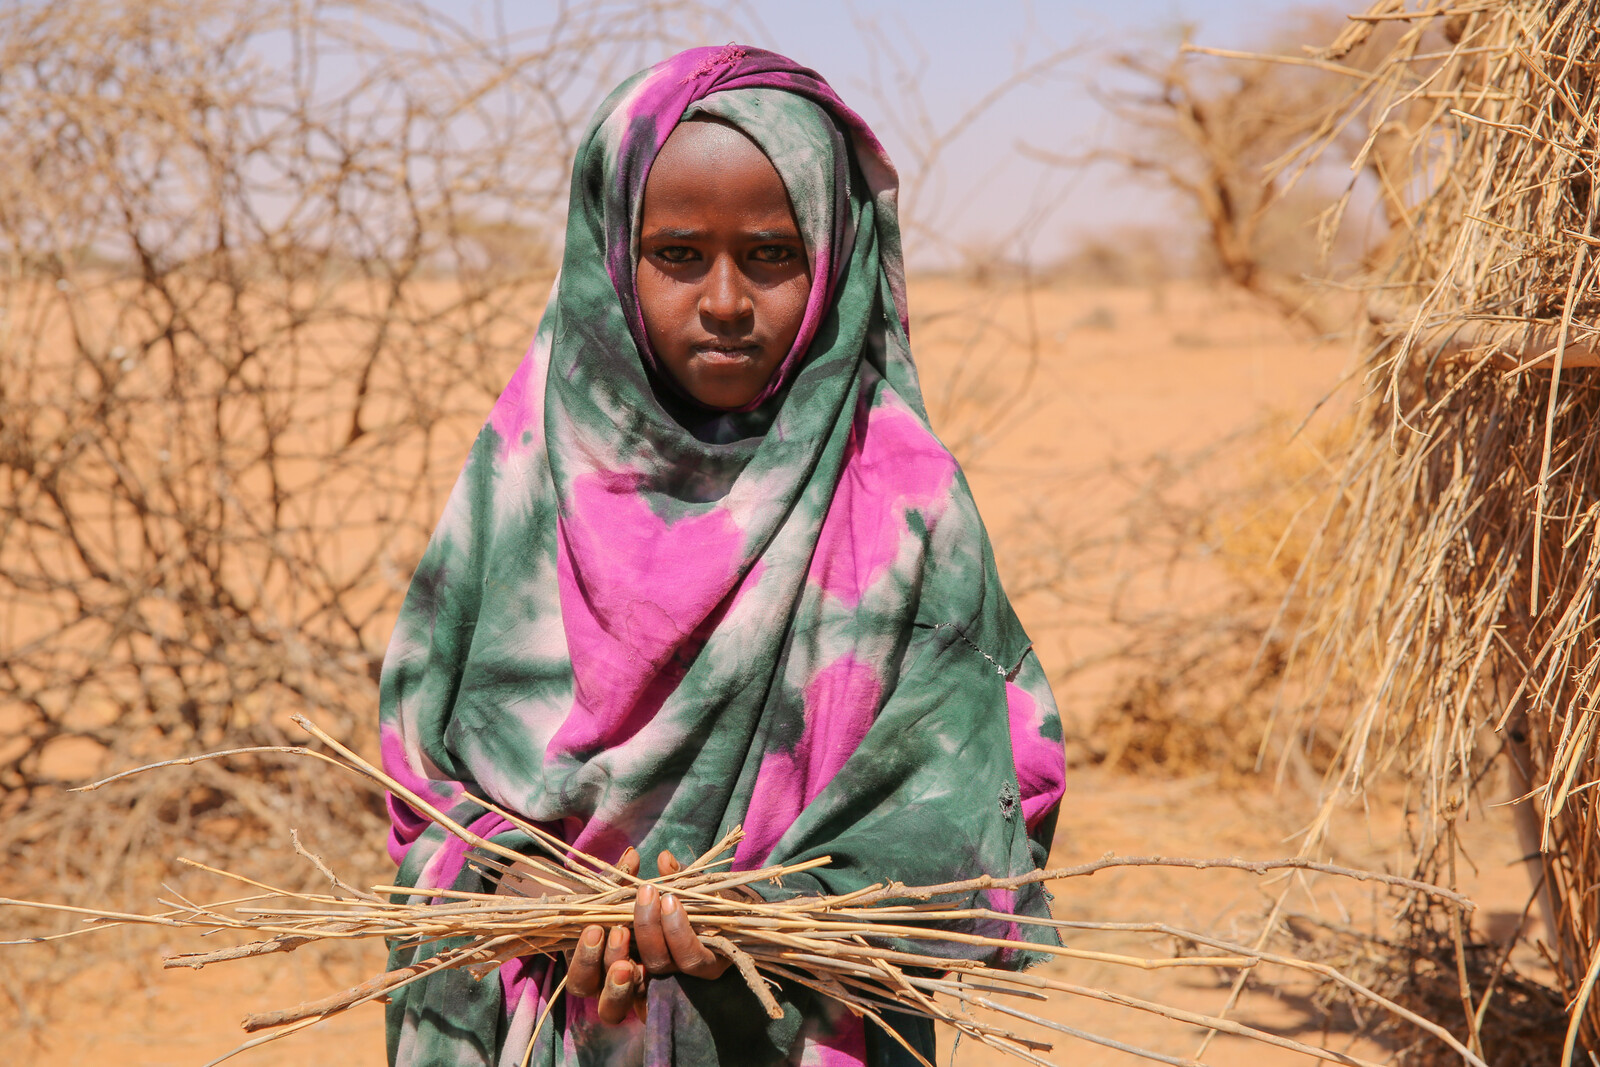 Kind in Somalia hält trockenes Stroh in den Händen.